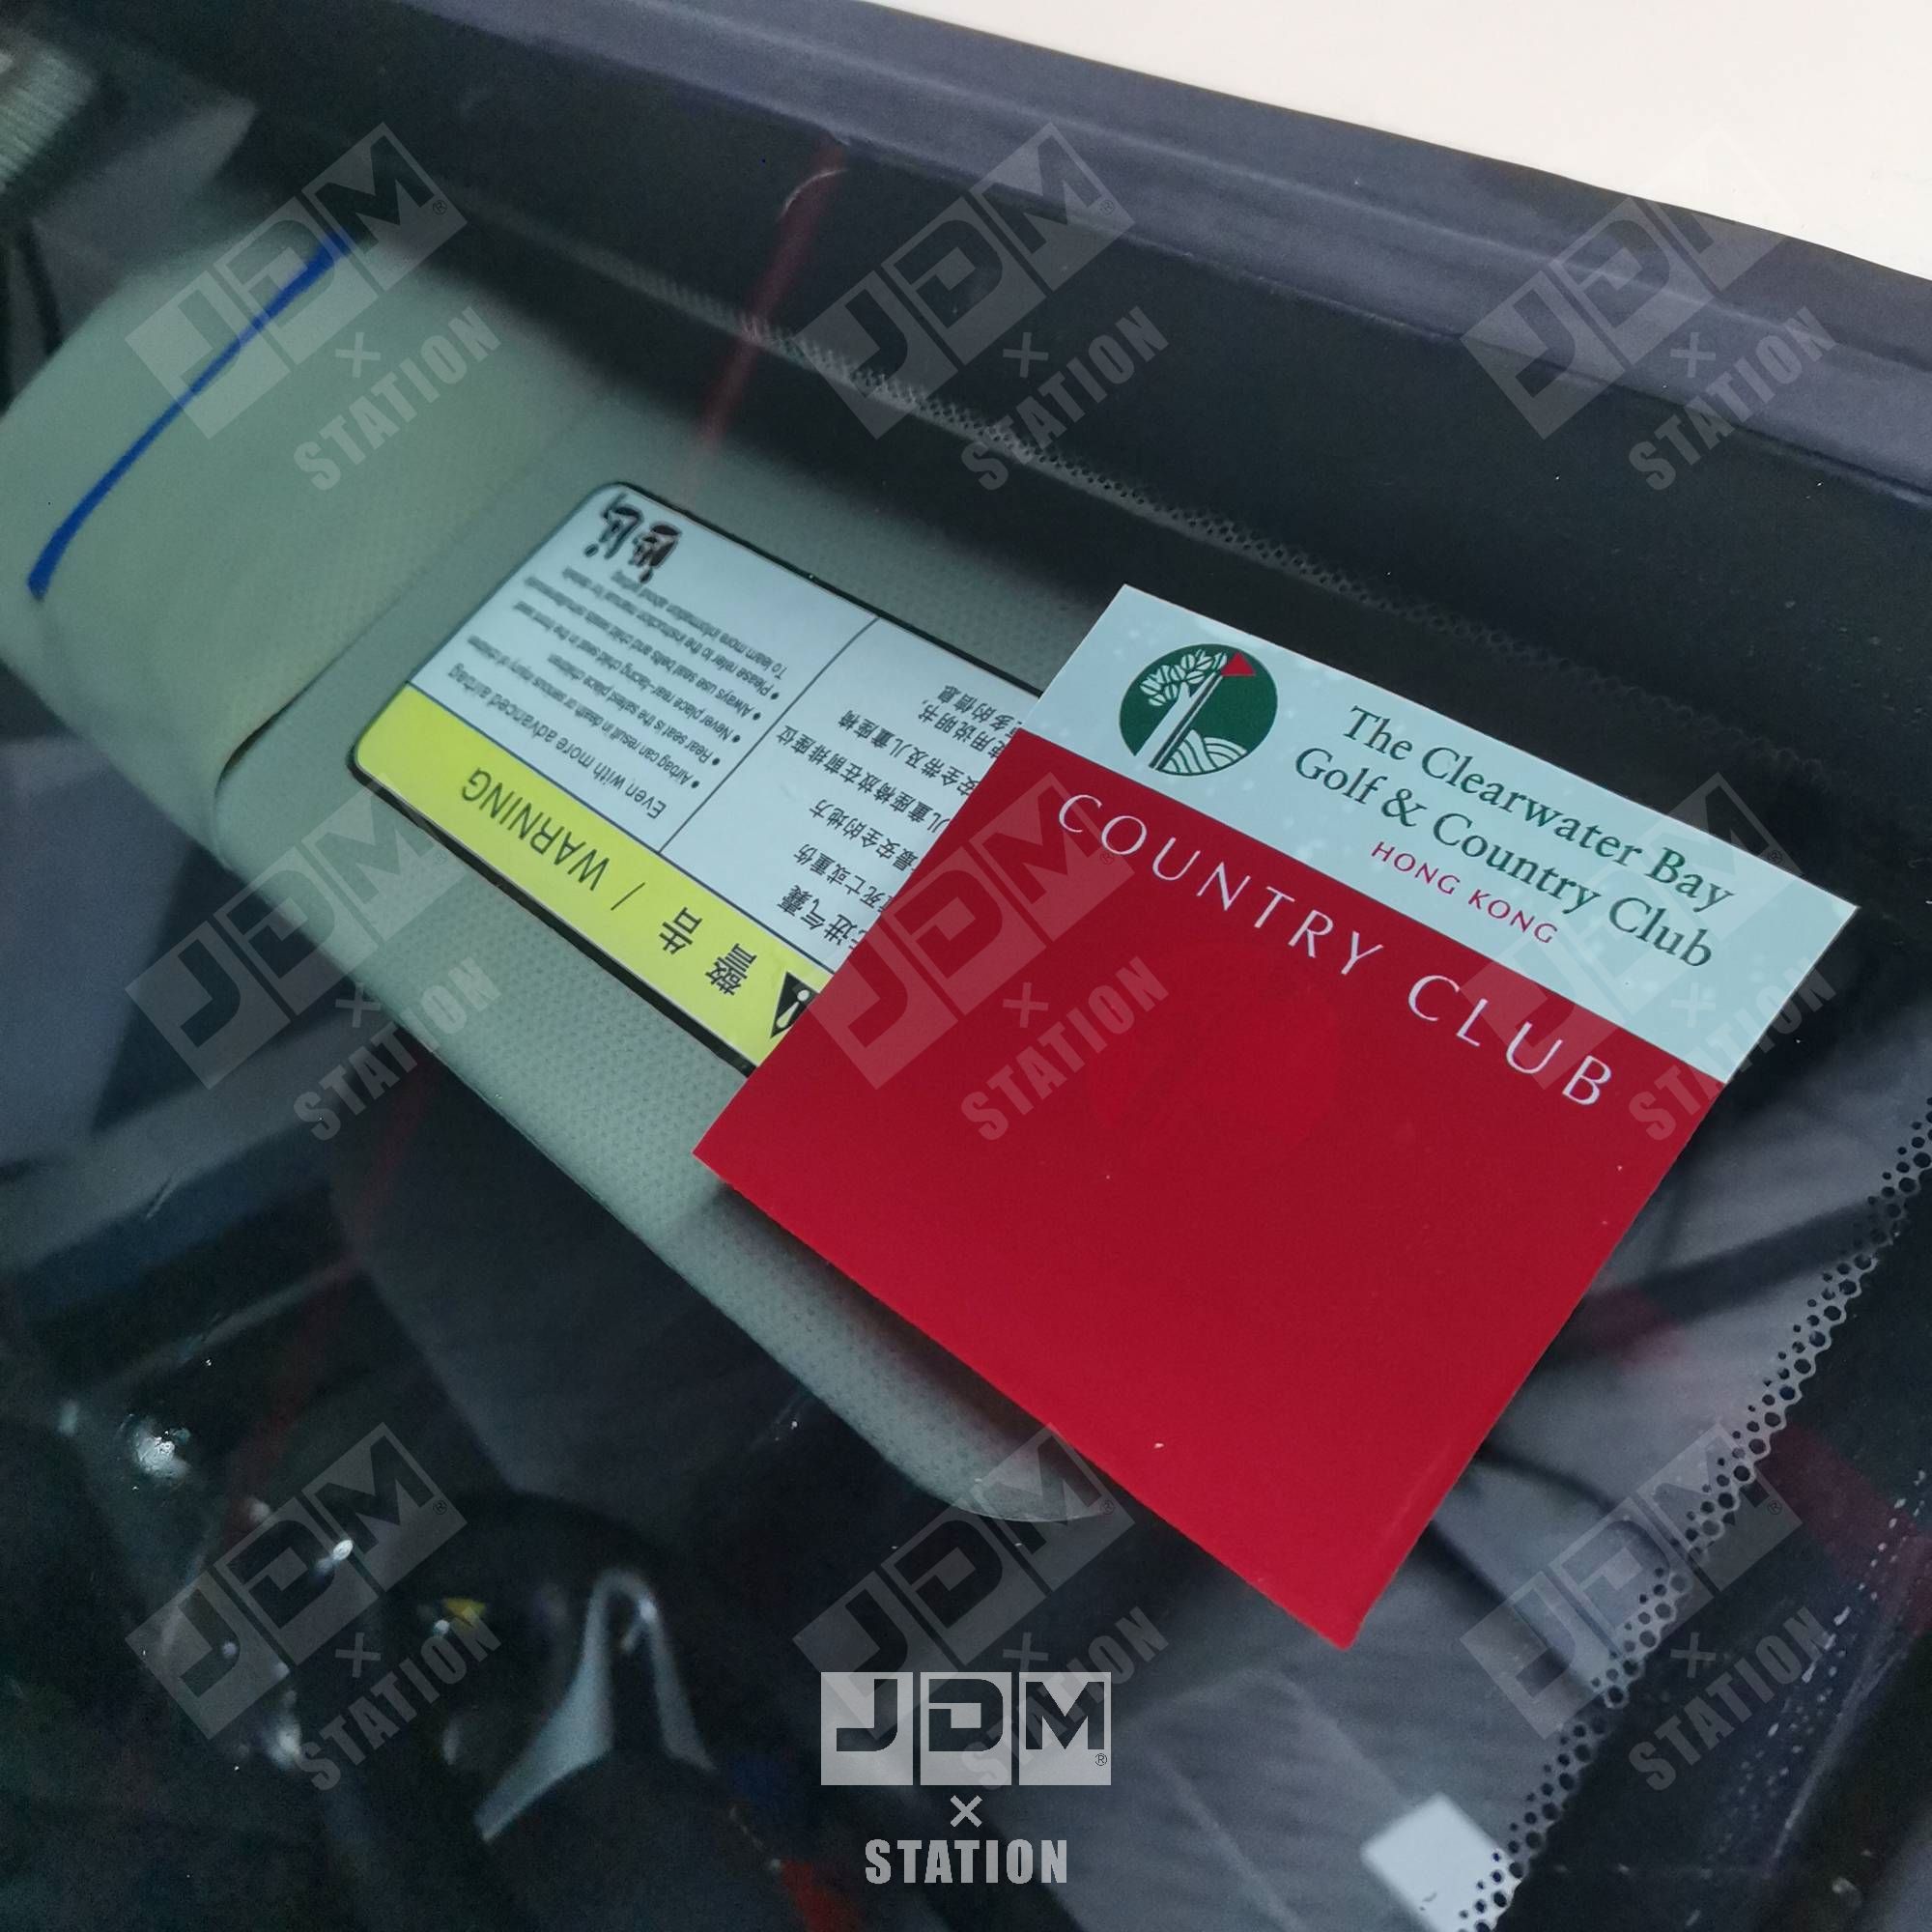 JDM车贴适用于香港清水灣哥爾夫球鄉村俱樂部贴纸挡风玻璃车内贴